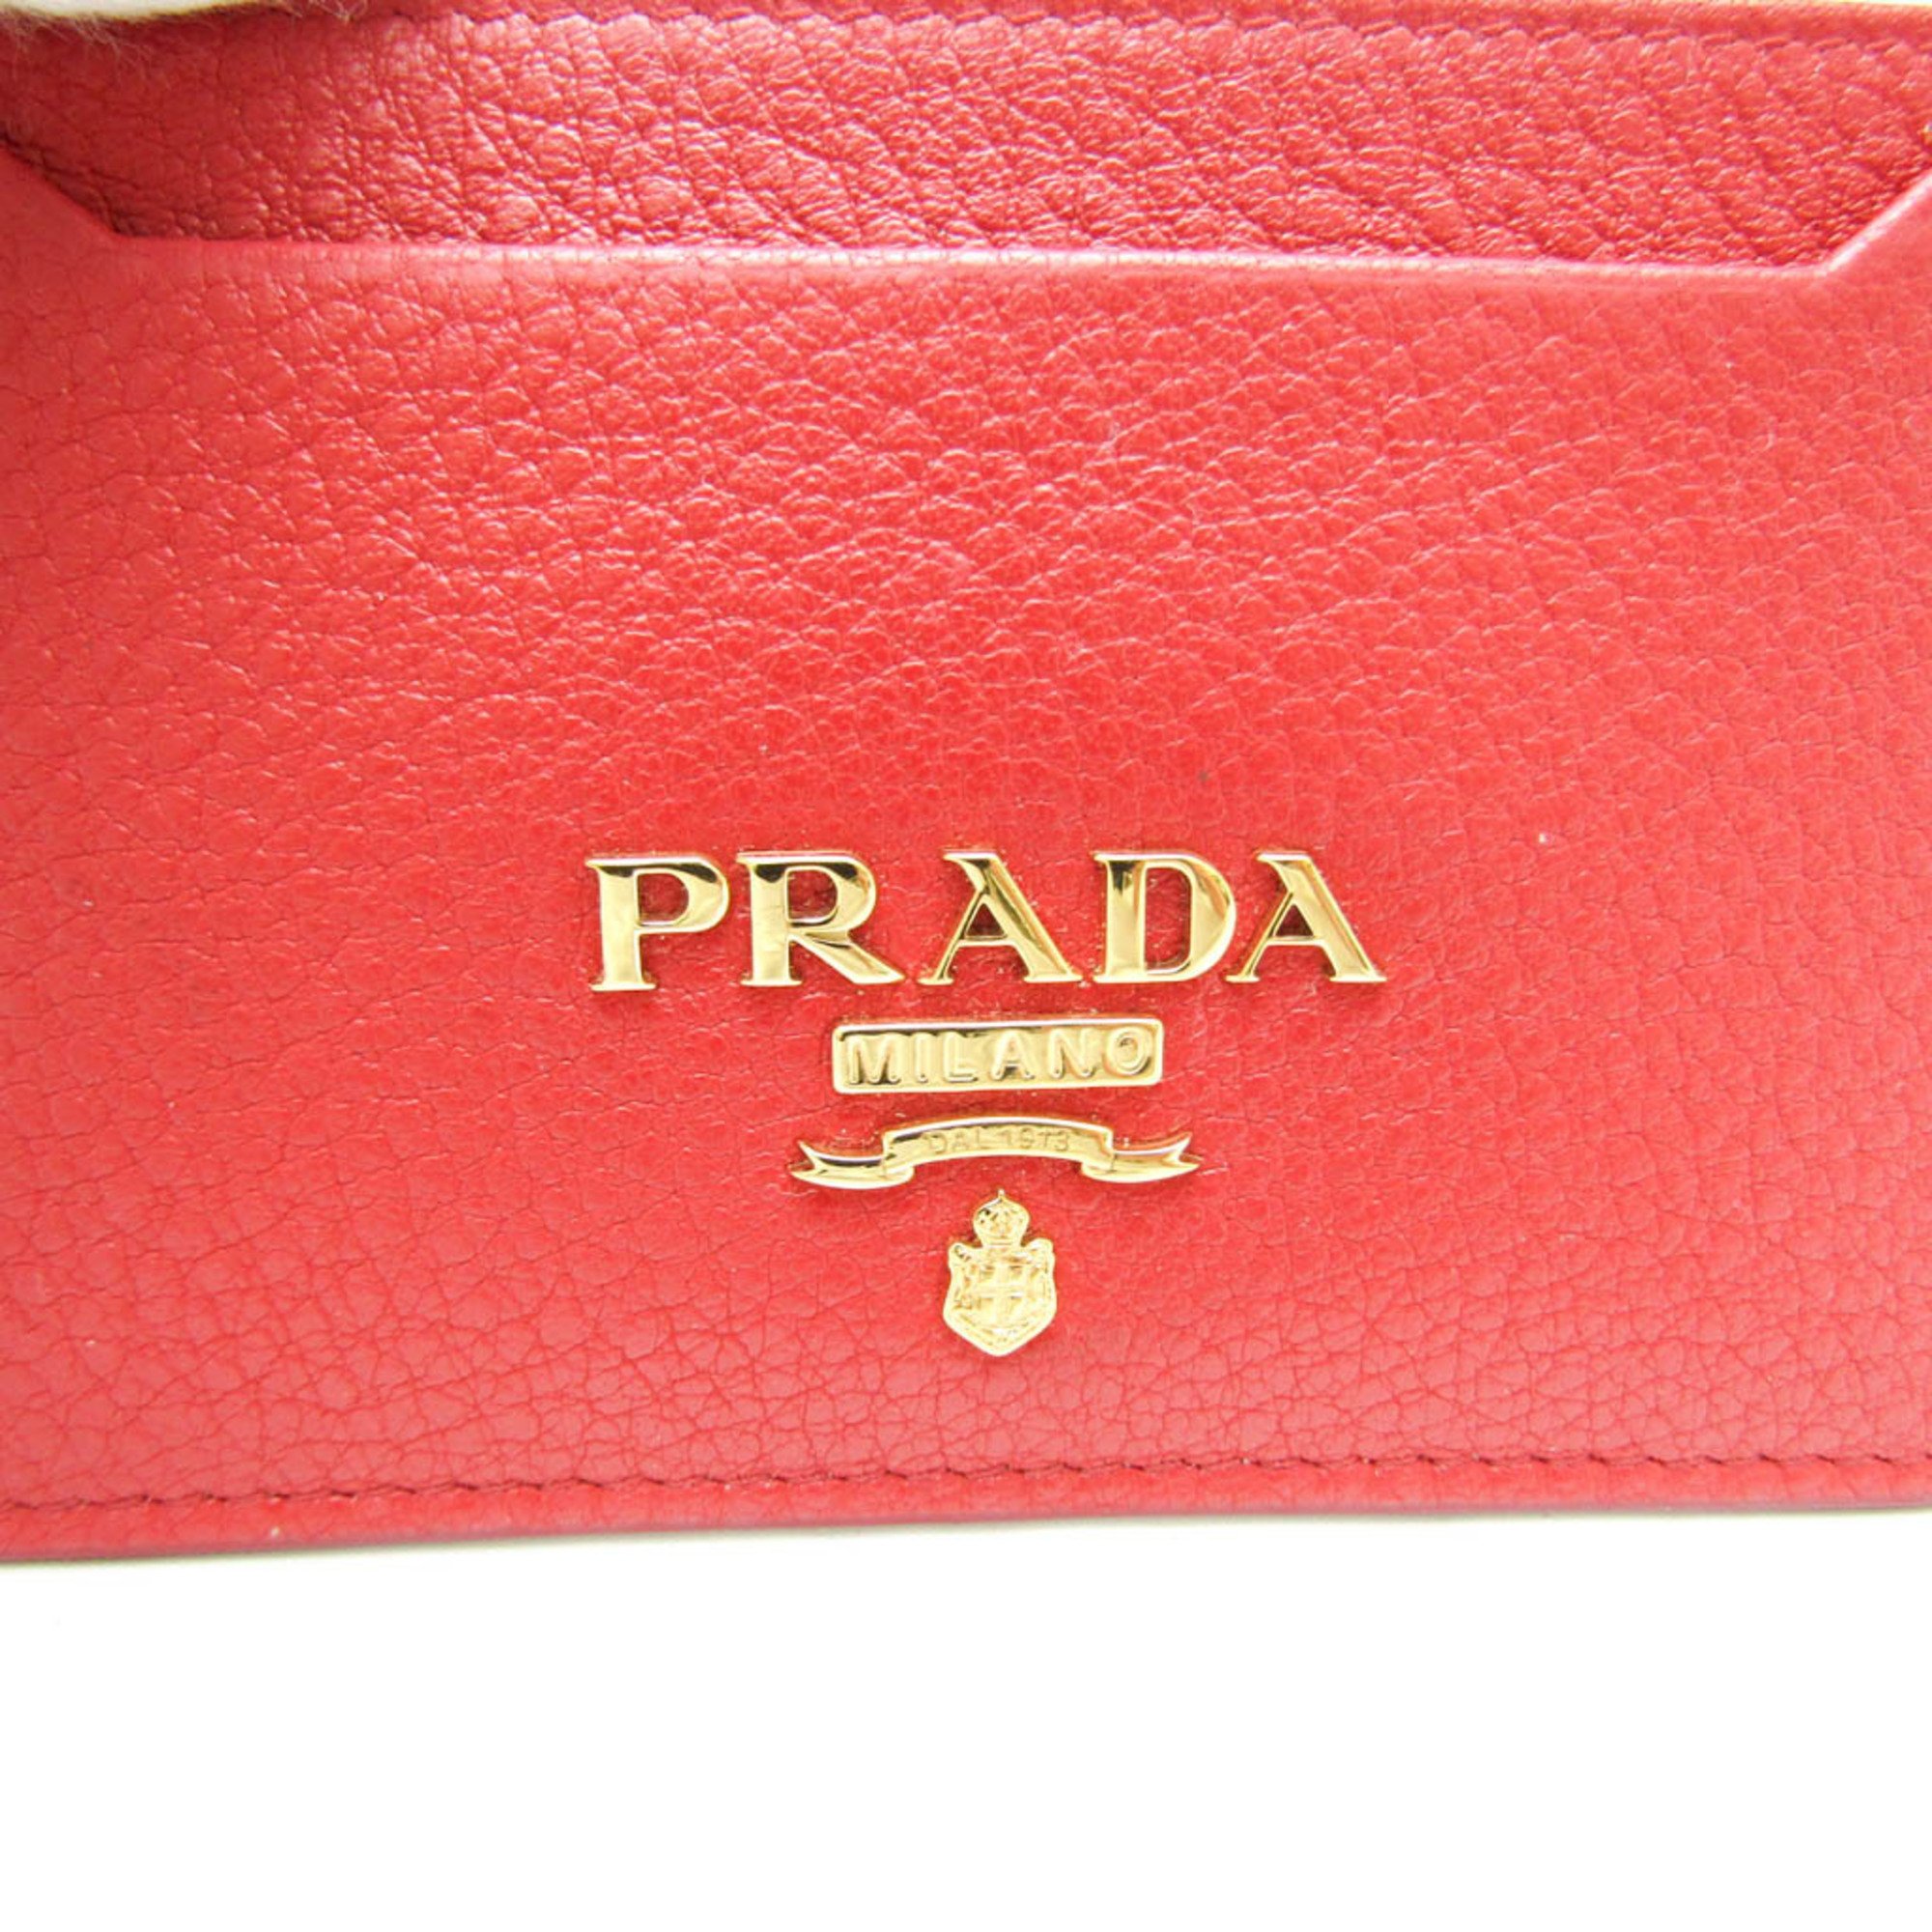 Prada 1MC208 Leather Card Case Red Color